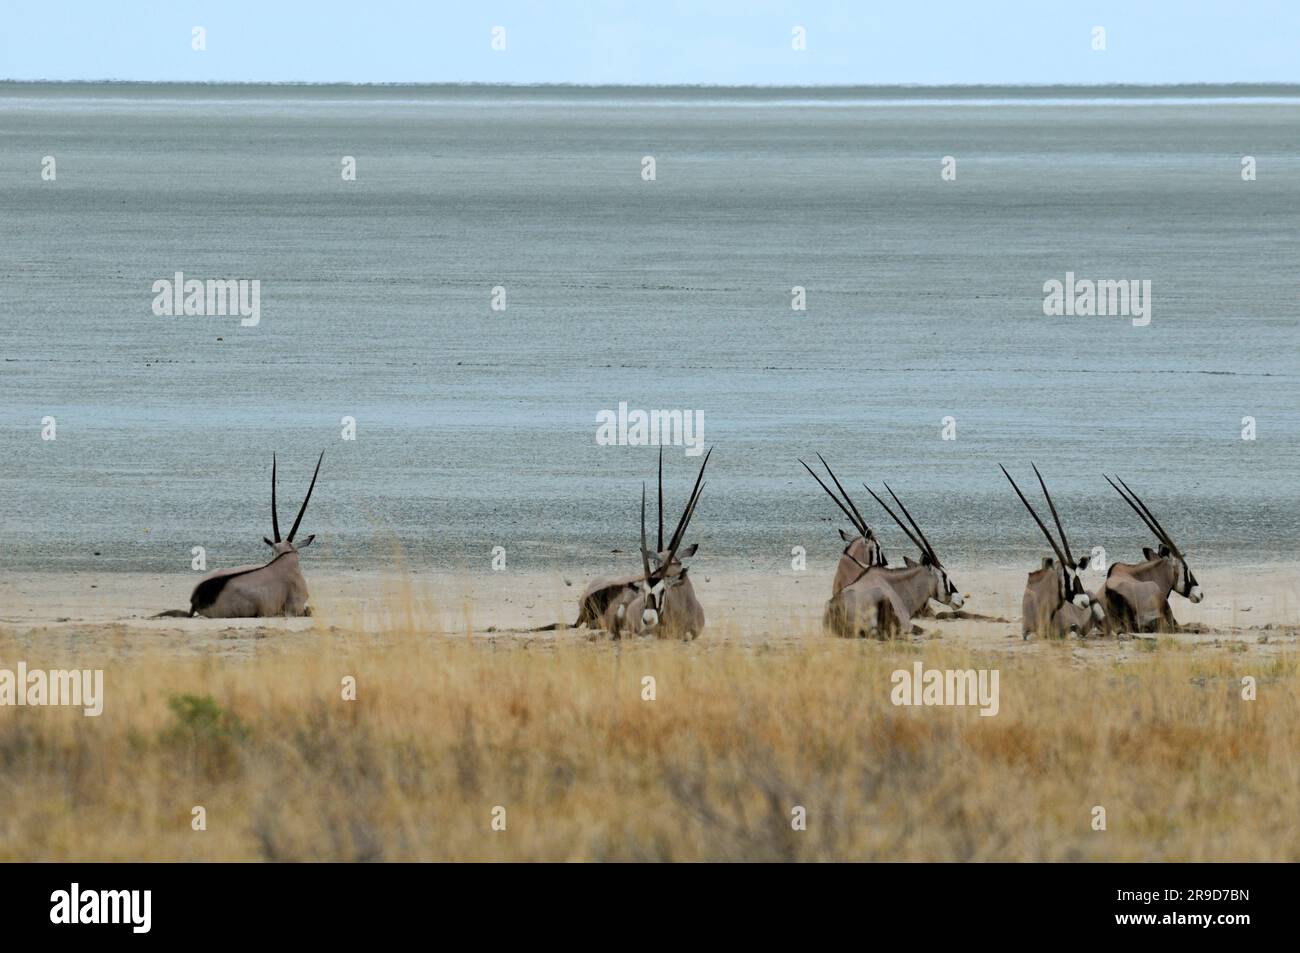 Gemsbok (Oryx gazella), Etosha Pan, Parc national d'Etosha, région de Kunene, Namibie Banque D'Images